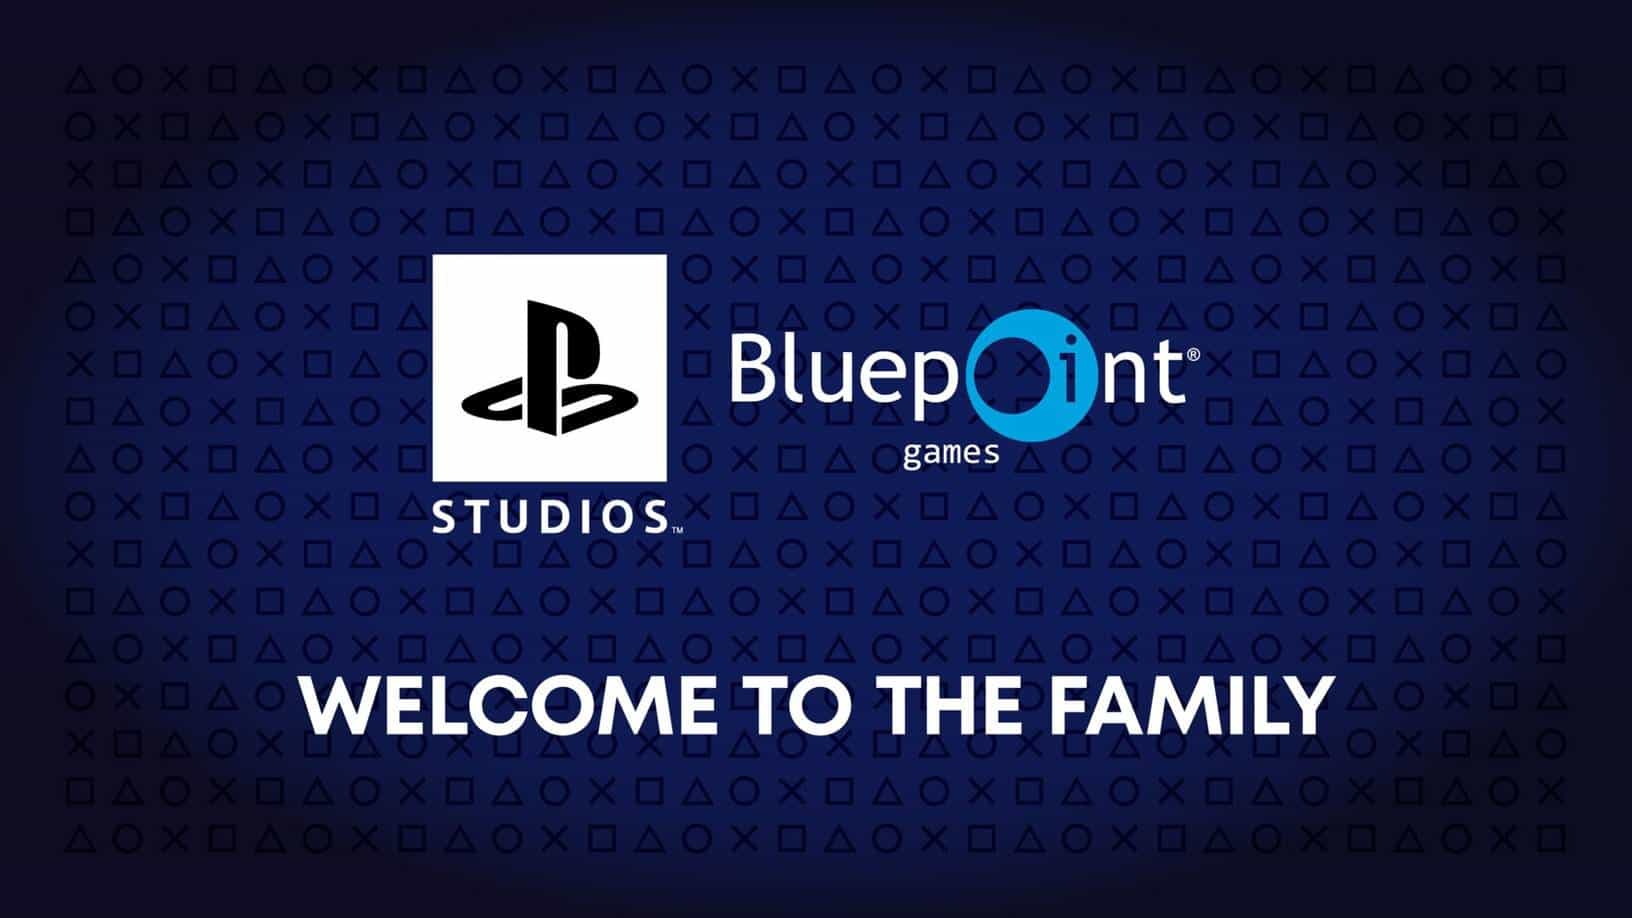 Bluepoint Studios